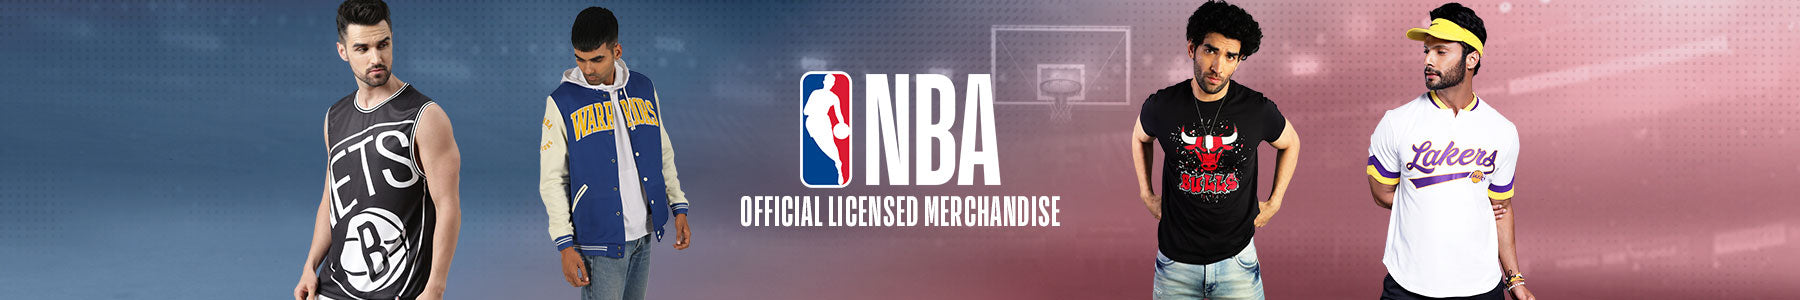 NBA League Banner